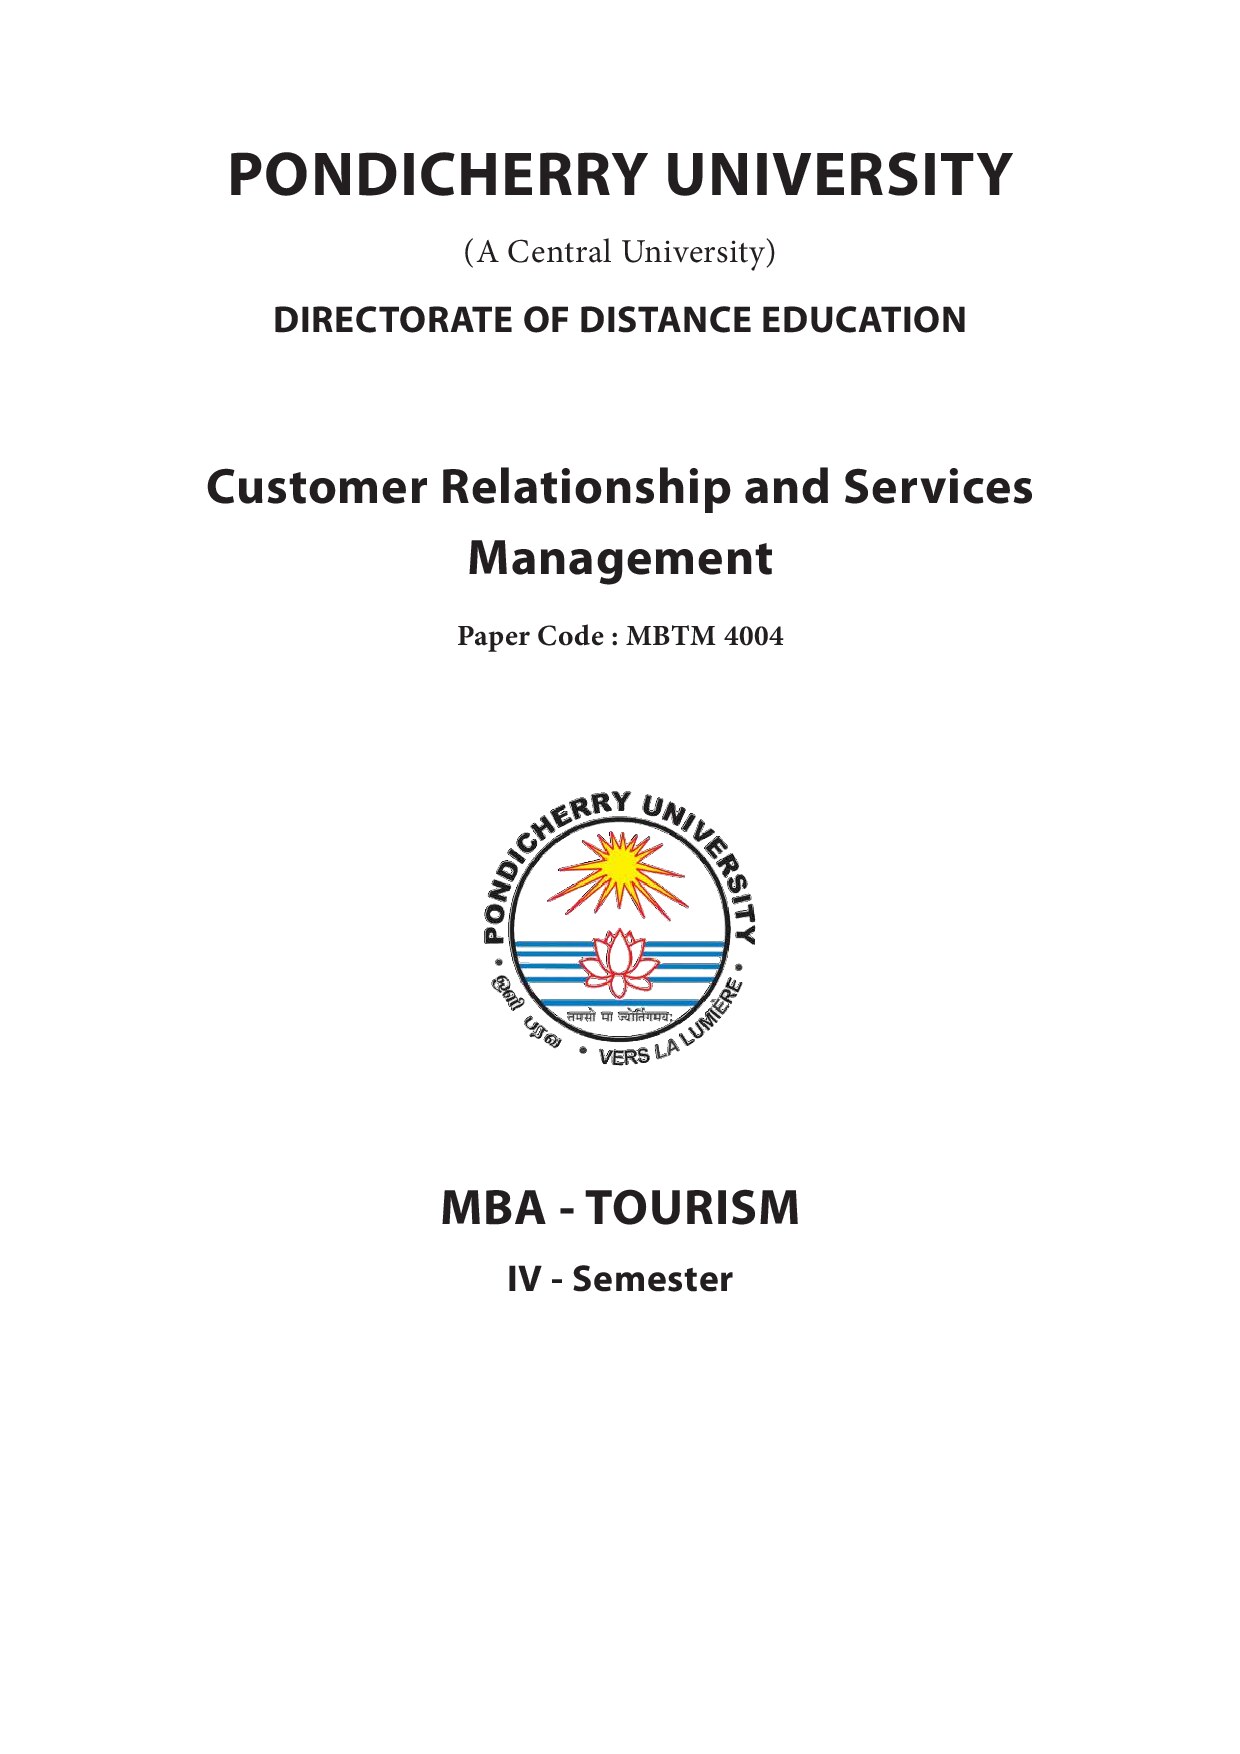 Customer Relationship & Service Management